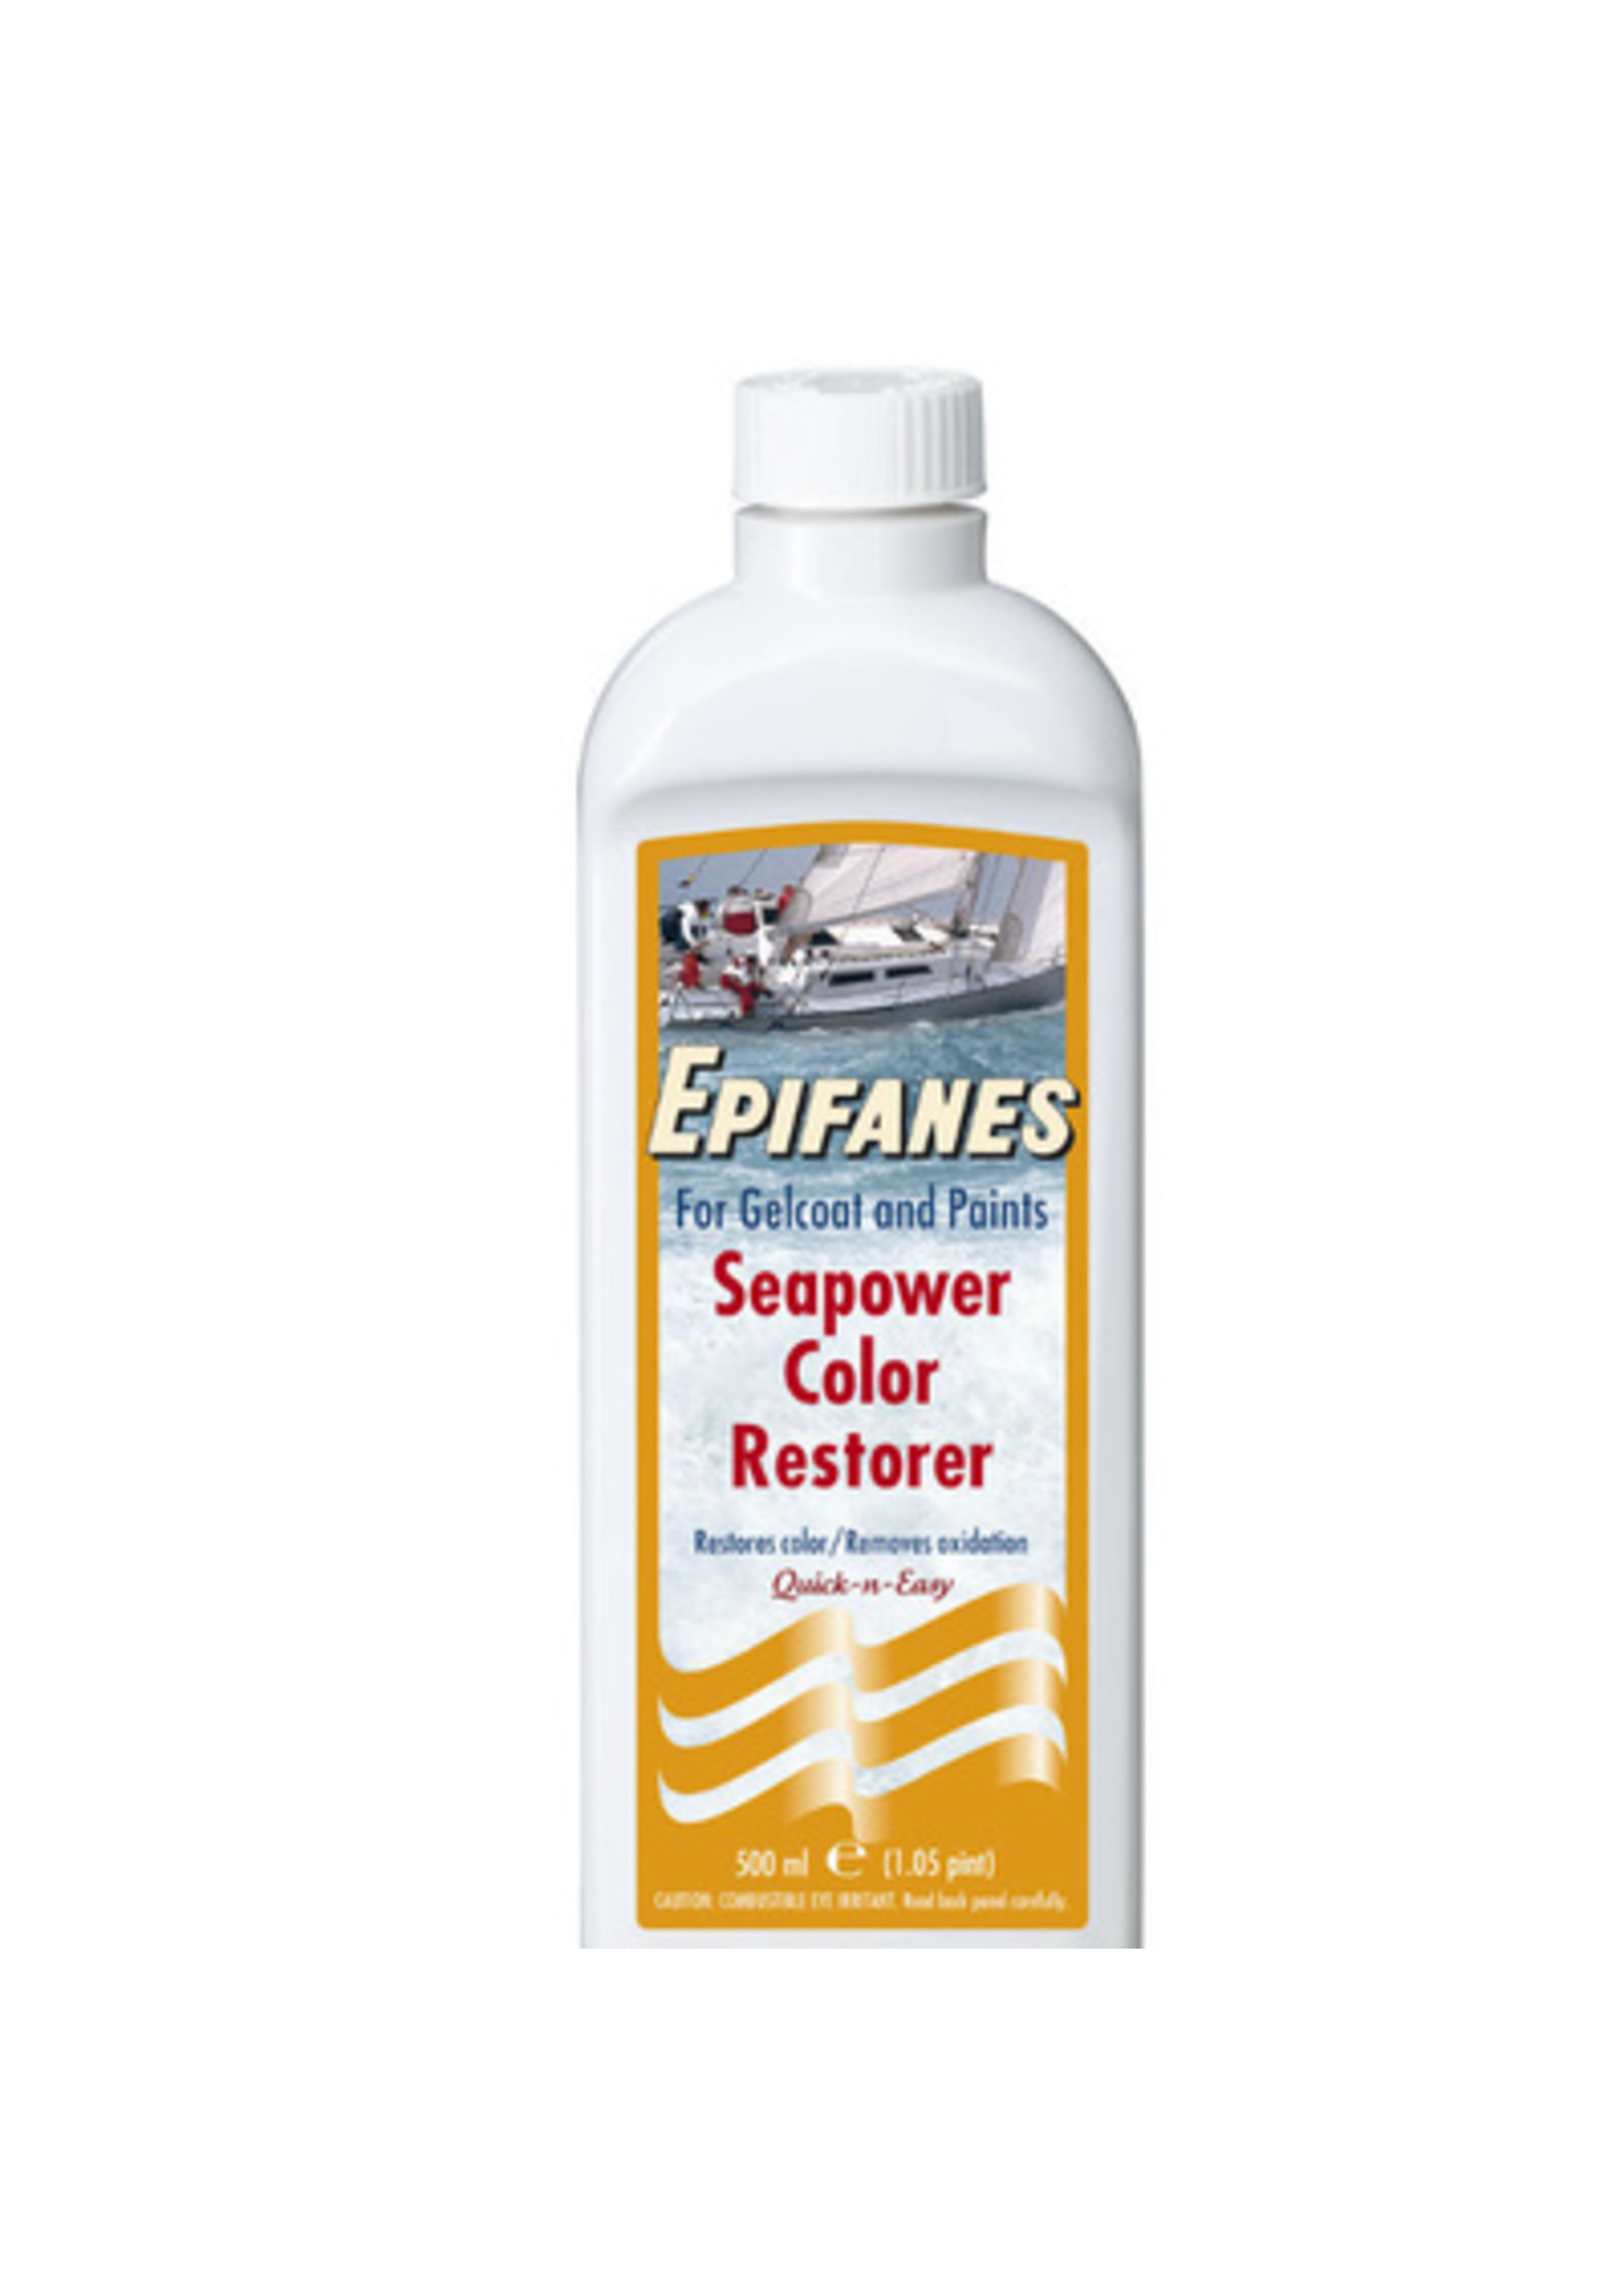 Epifsanes Seapower® Color Restorer